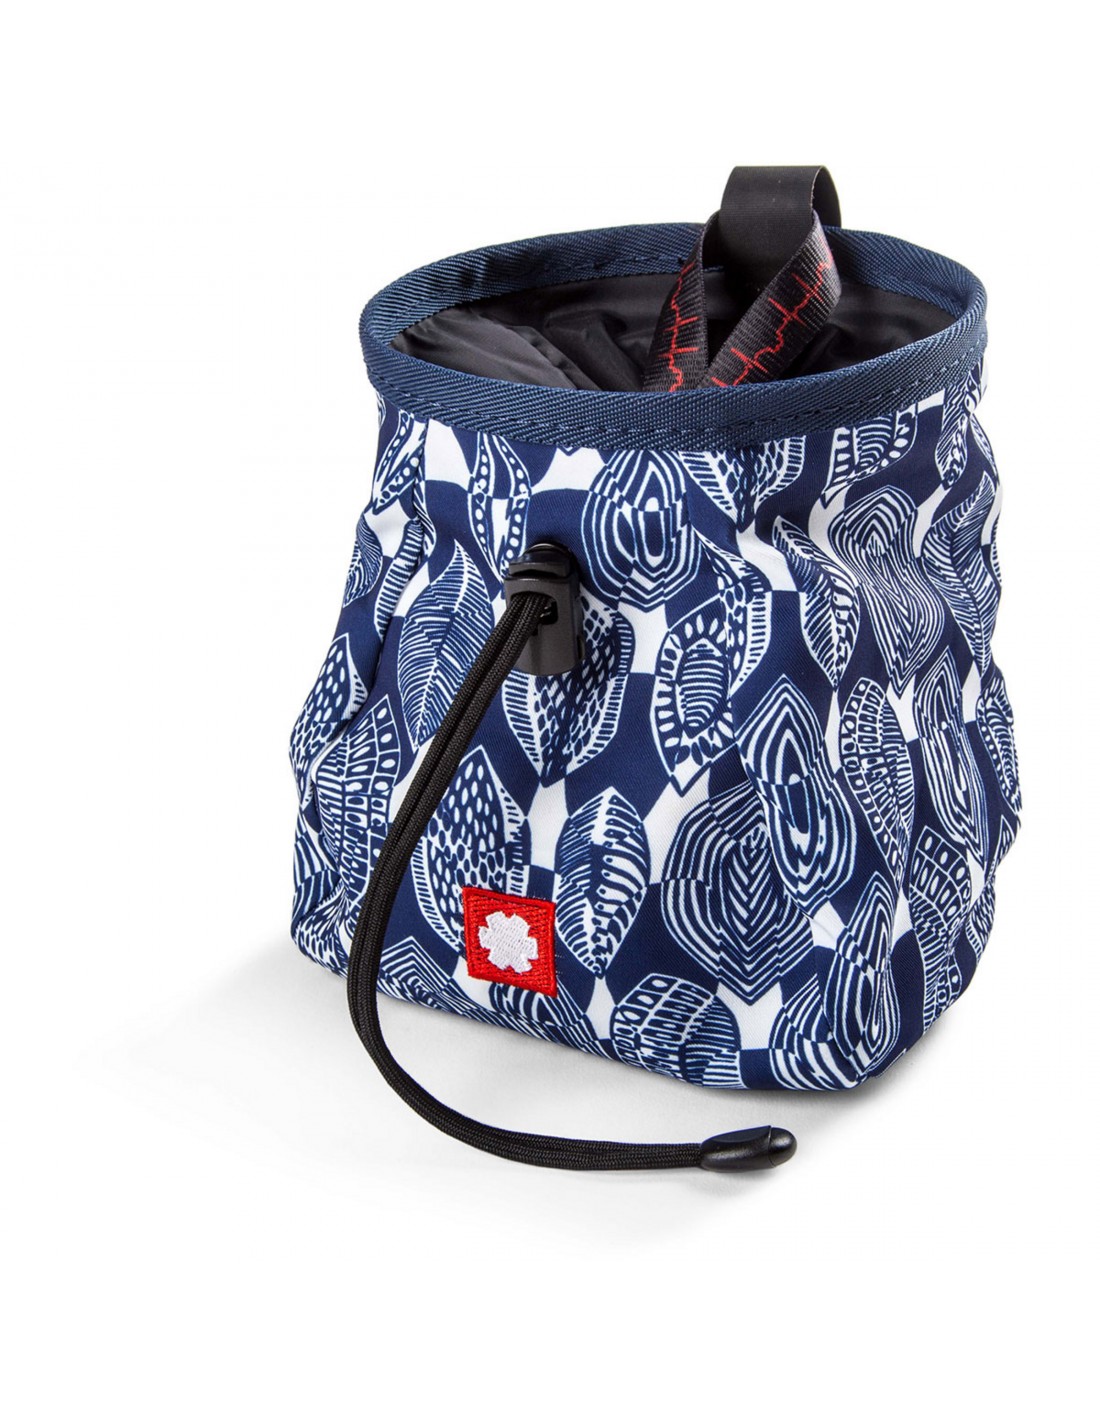 Ocun Chalkbag Lucky + Belt, abstract blue Chalkbag Verwendung - Klettern, Chalkbag Farbe - Blau, von Ocun